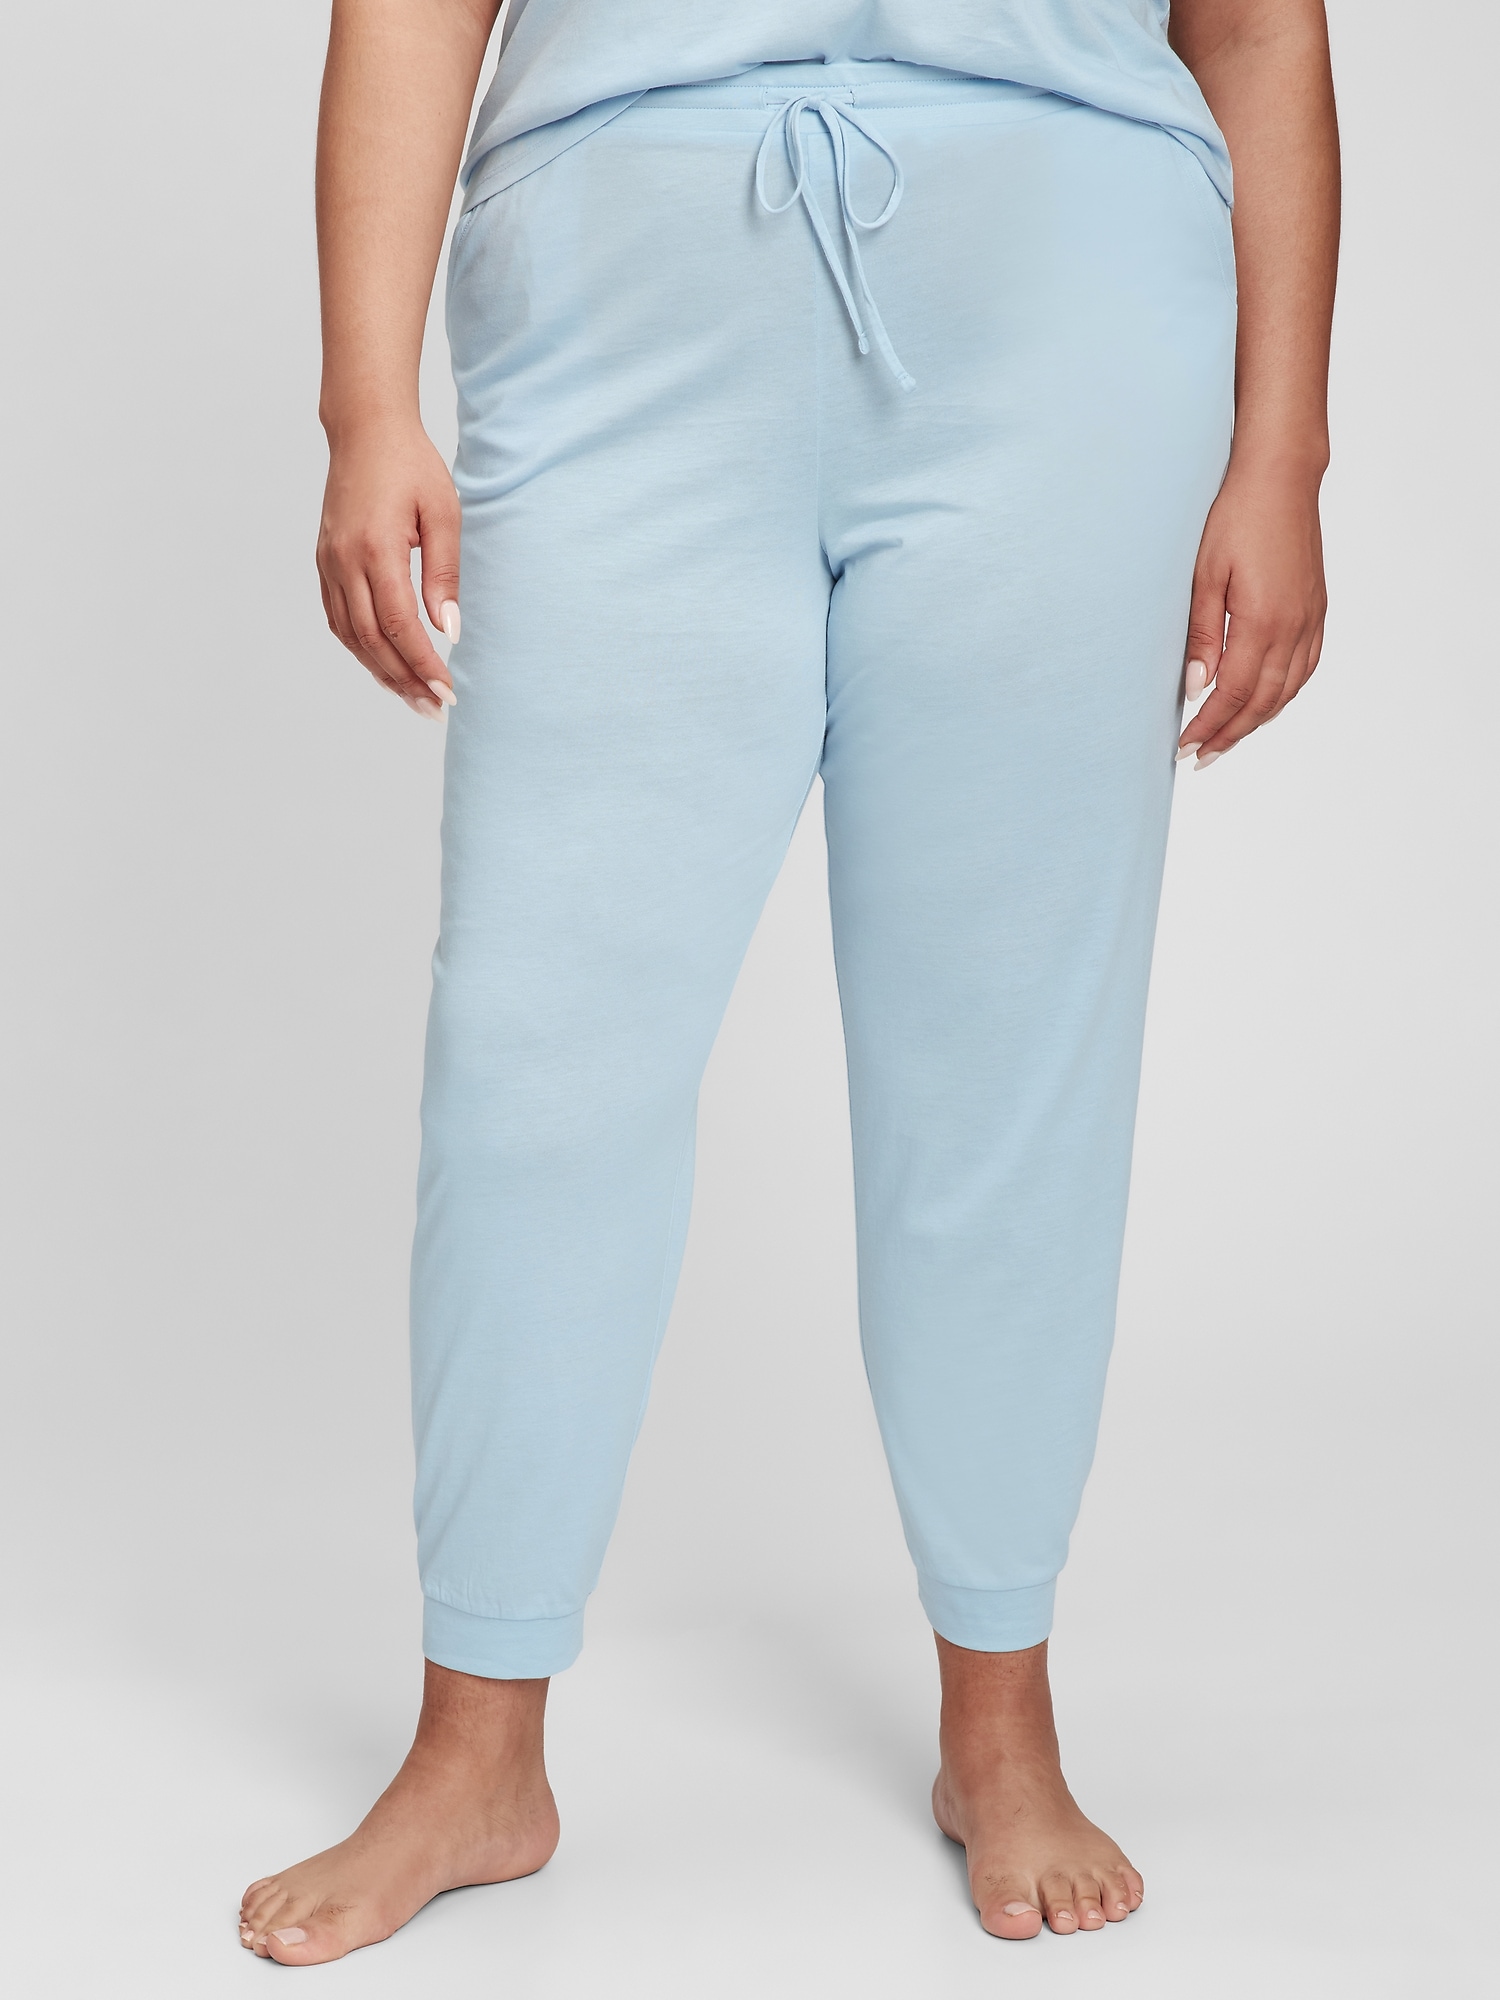 AnyBody Women's Pants Sz M Cozy Knit Jersey Foldover Jogger Blue